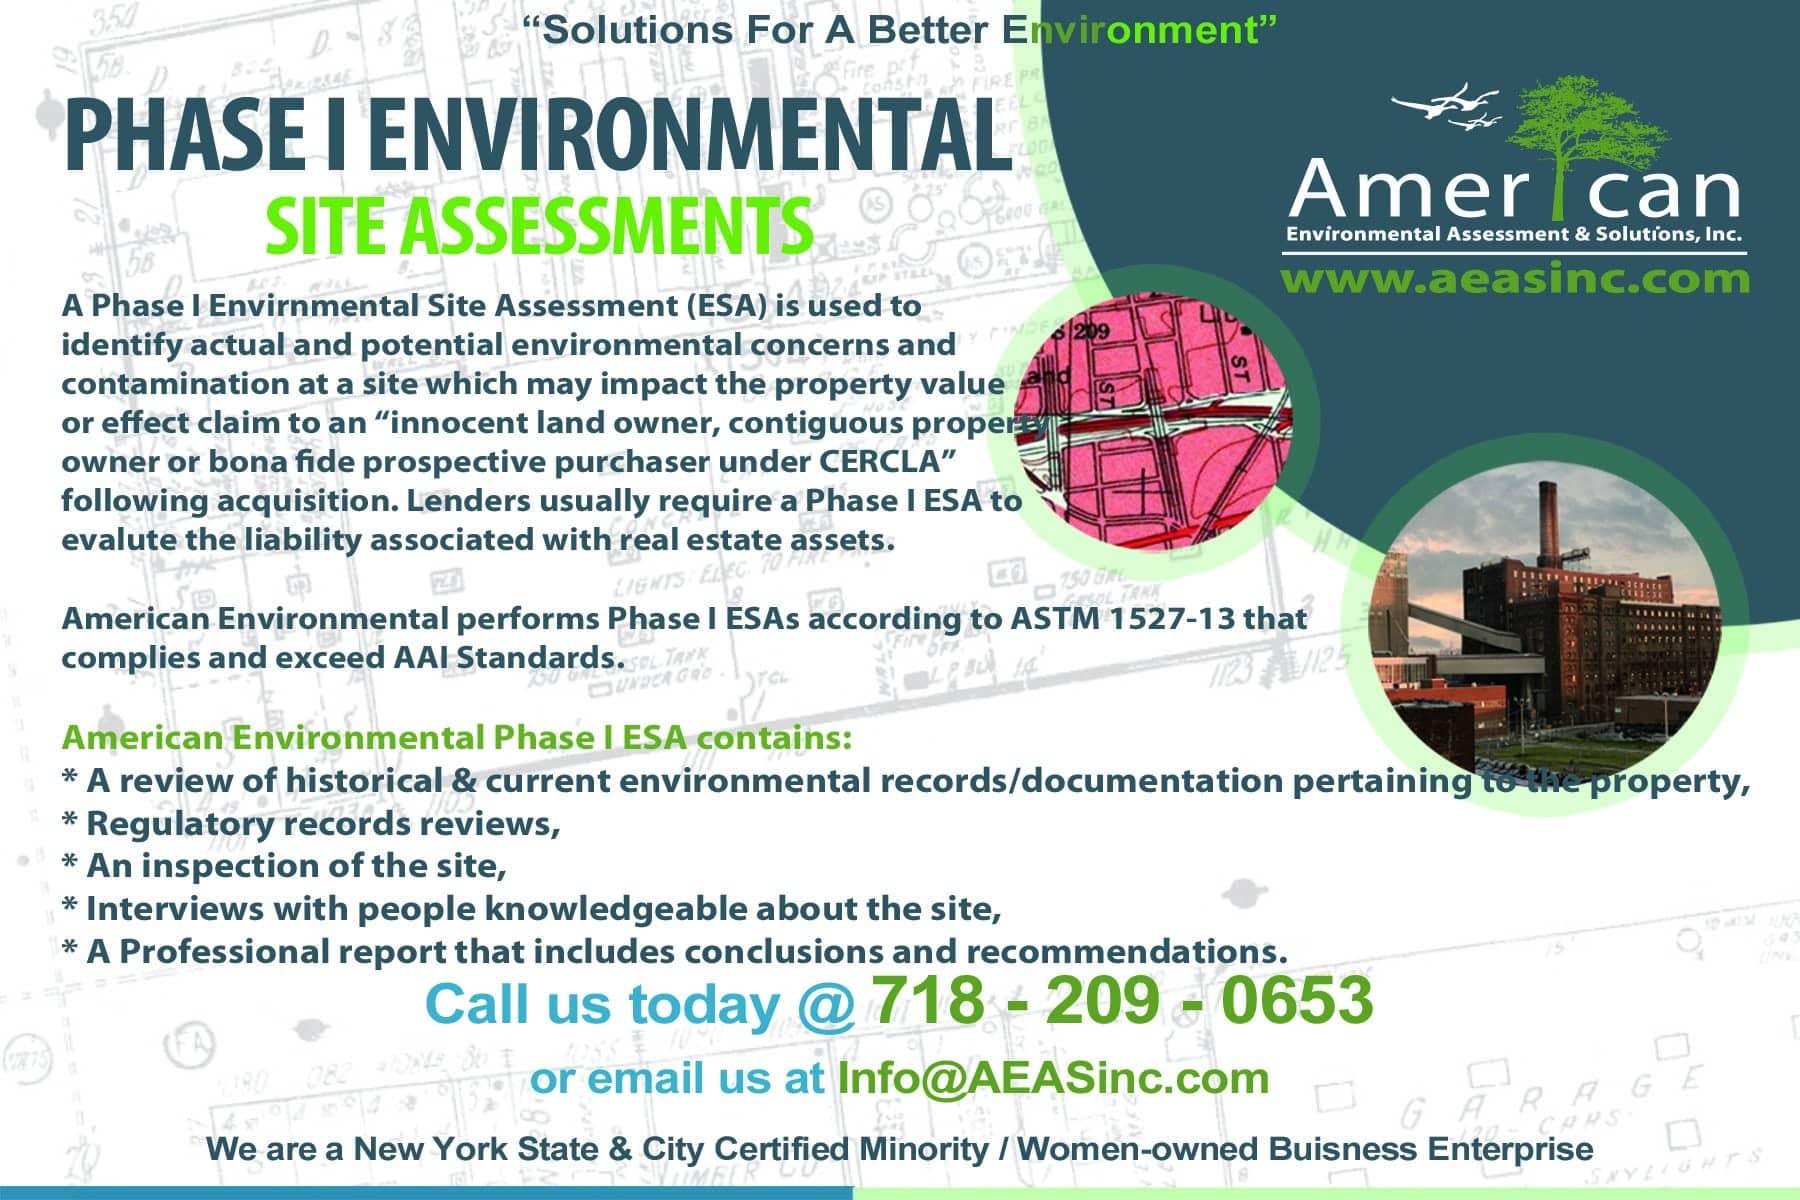 Environmental Site Assessment